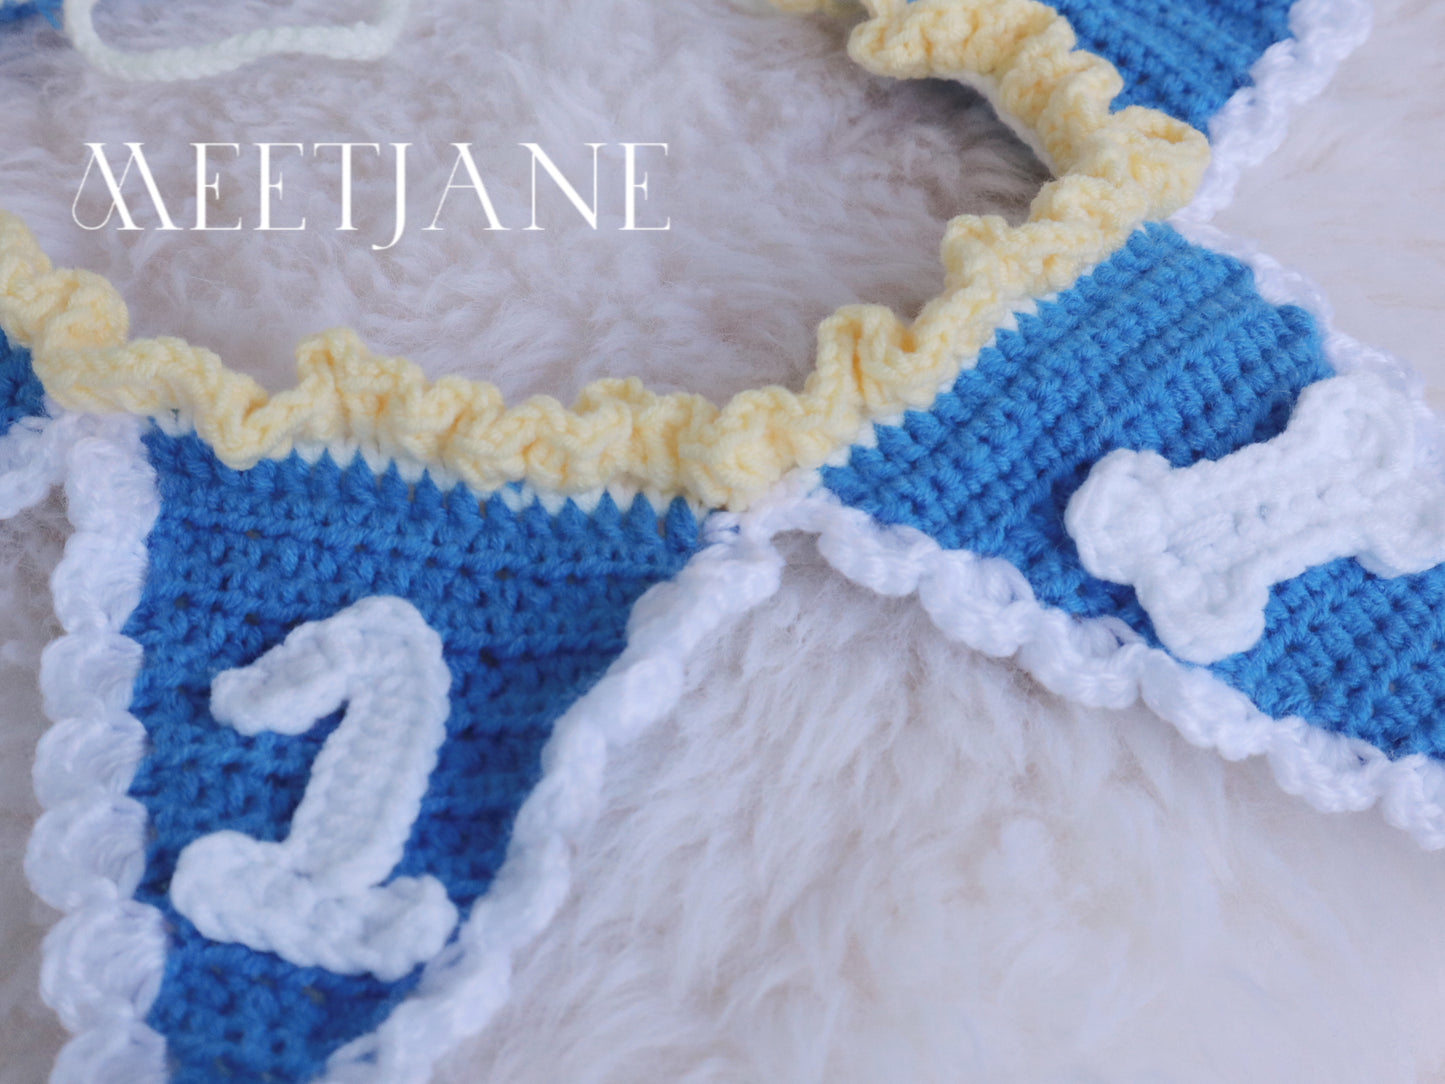 Crochet pet neckwear|Melbourne handmade |CUSTOMIZABLE|Birthday gift